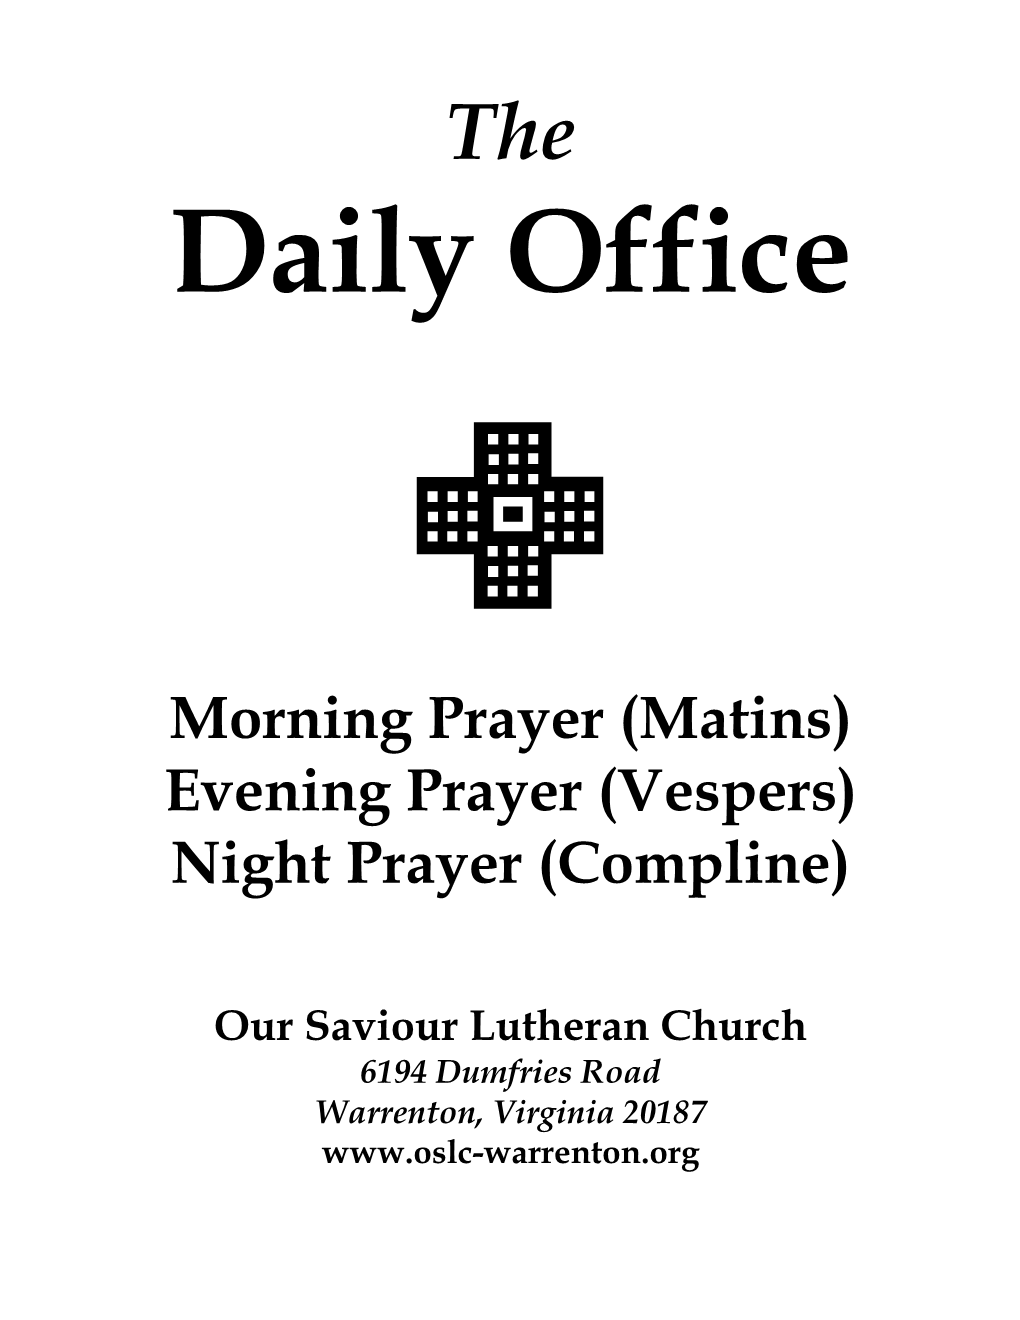 Matins) Evening Prayer (Vespers) Night Prayer (Compline